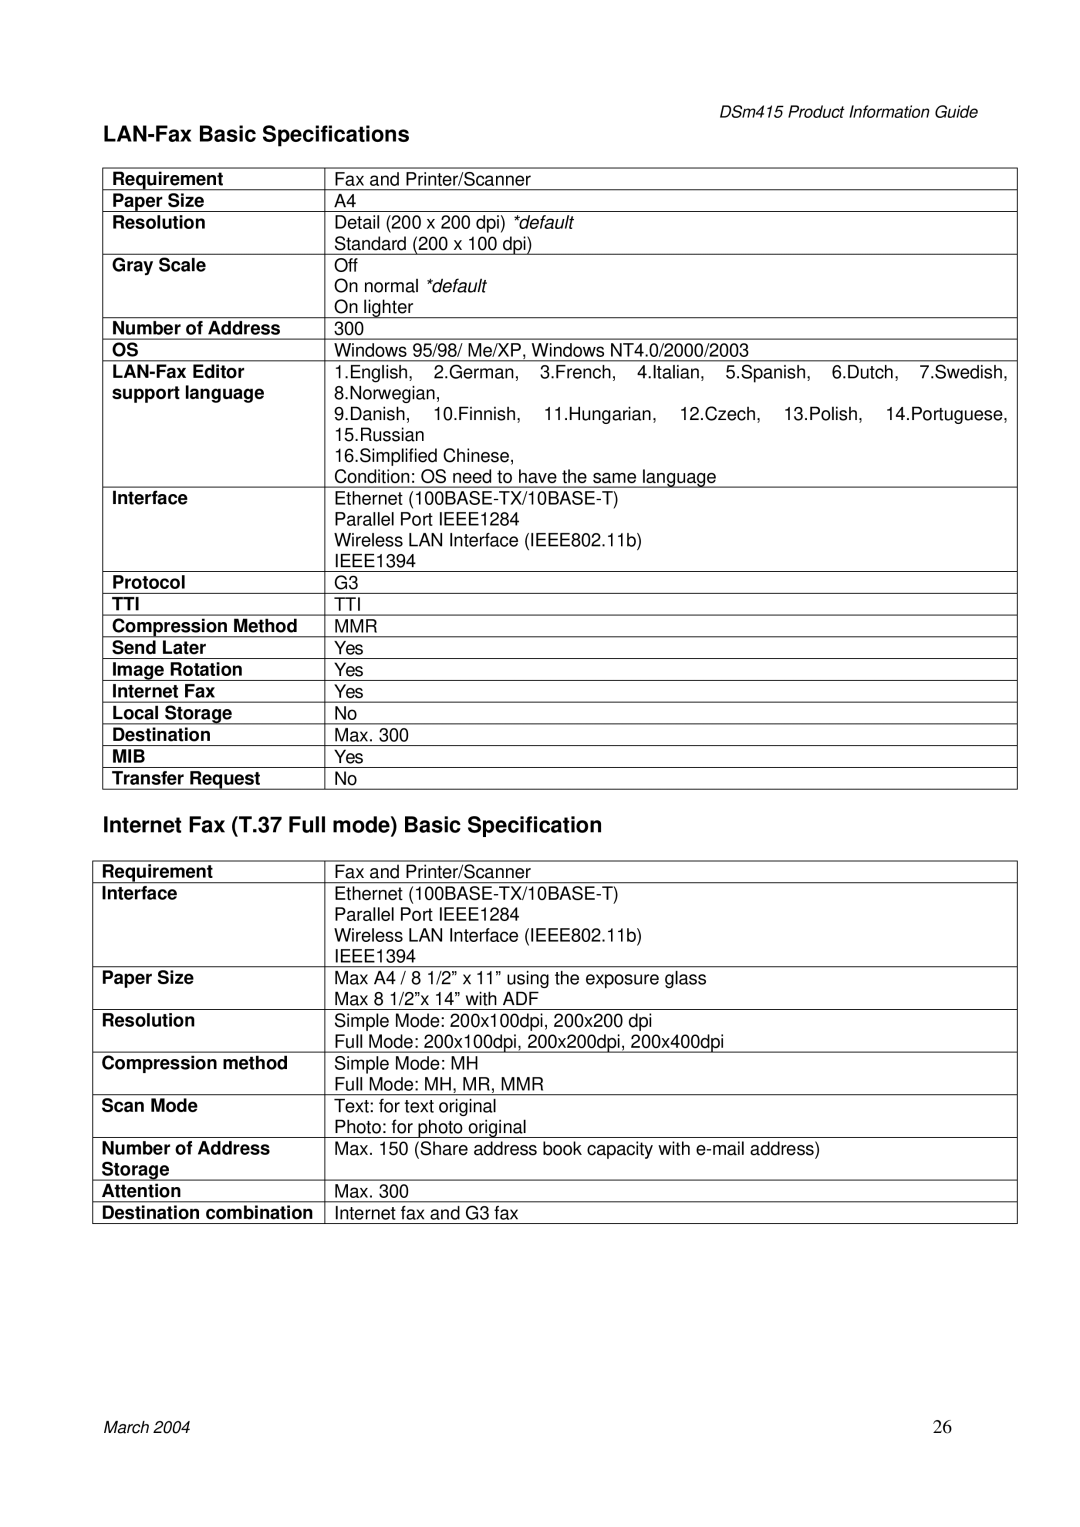 3Com DSm415 manual LAN-Fax Basic Specifications, Internet Fax T.37 Full mode Basic Specification 